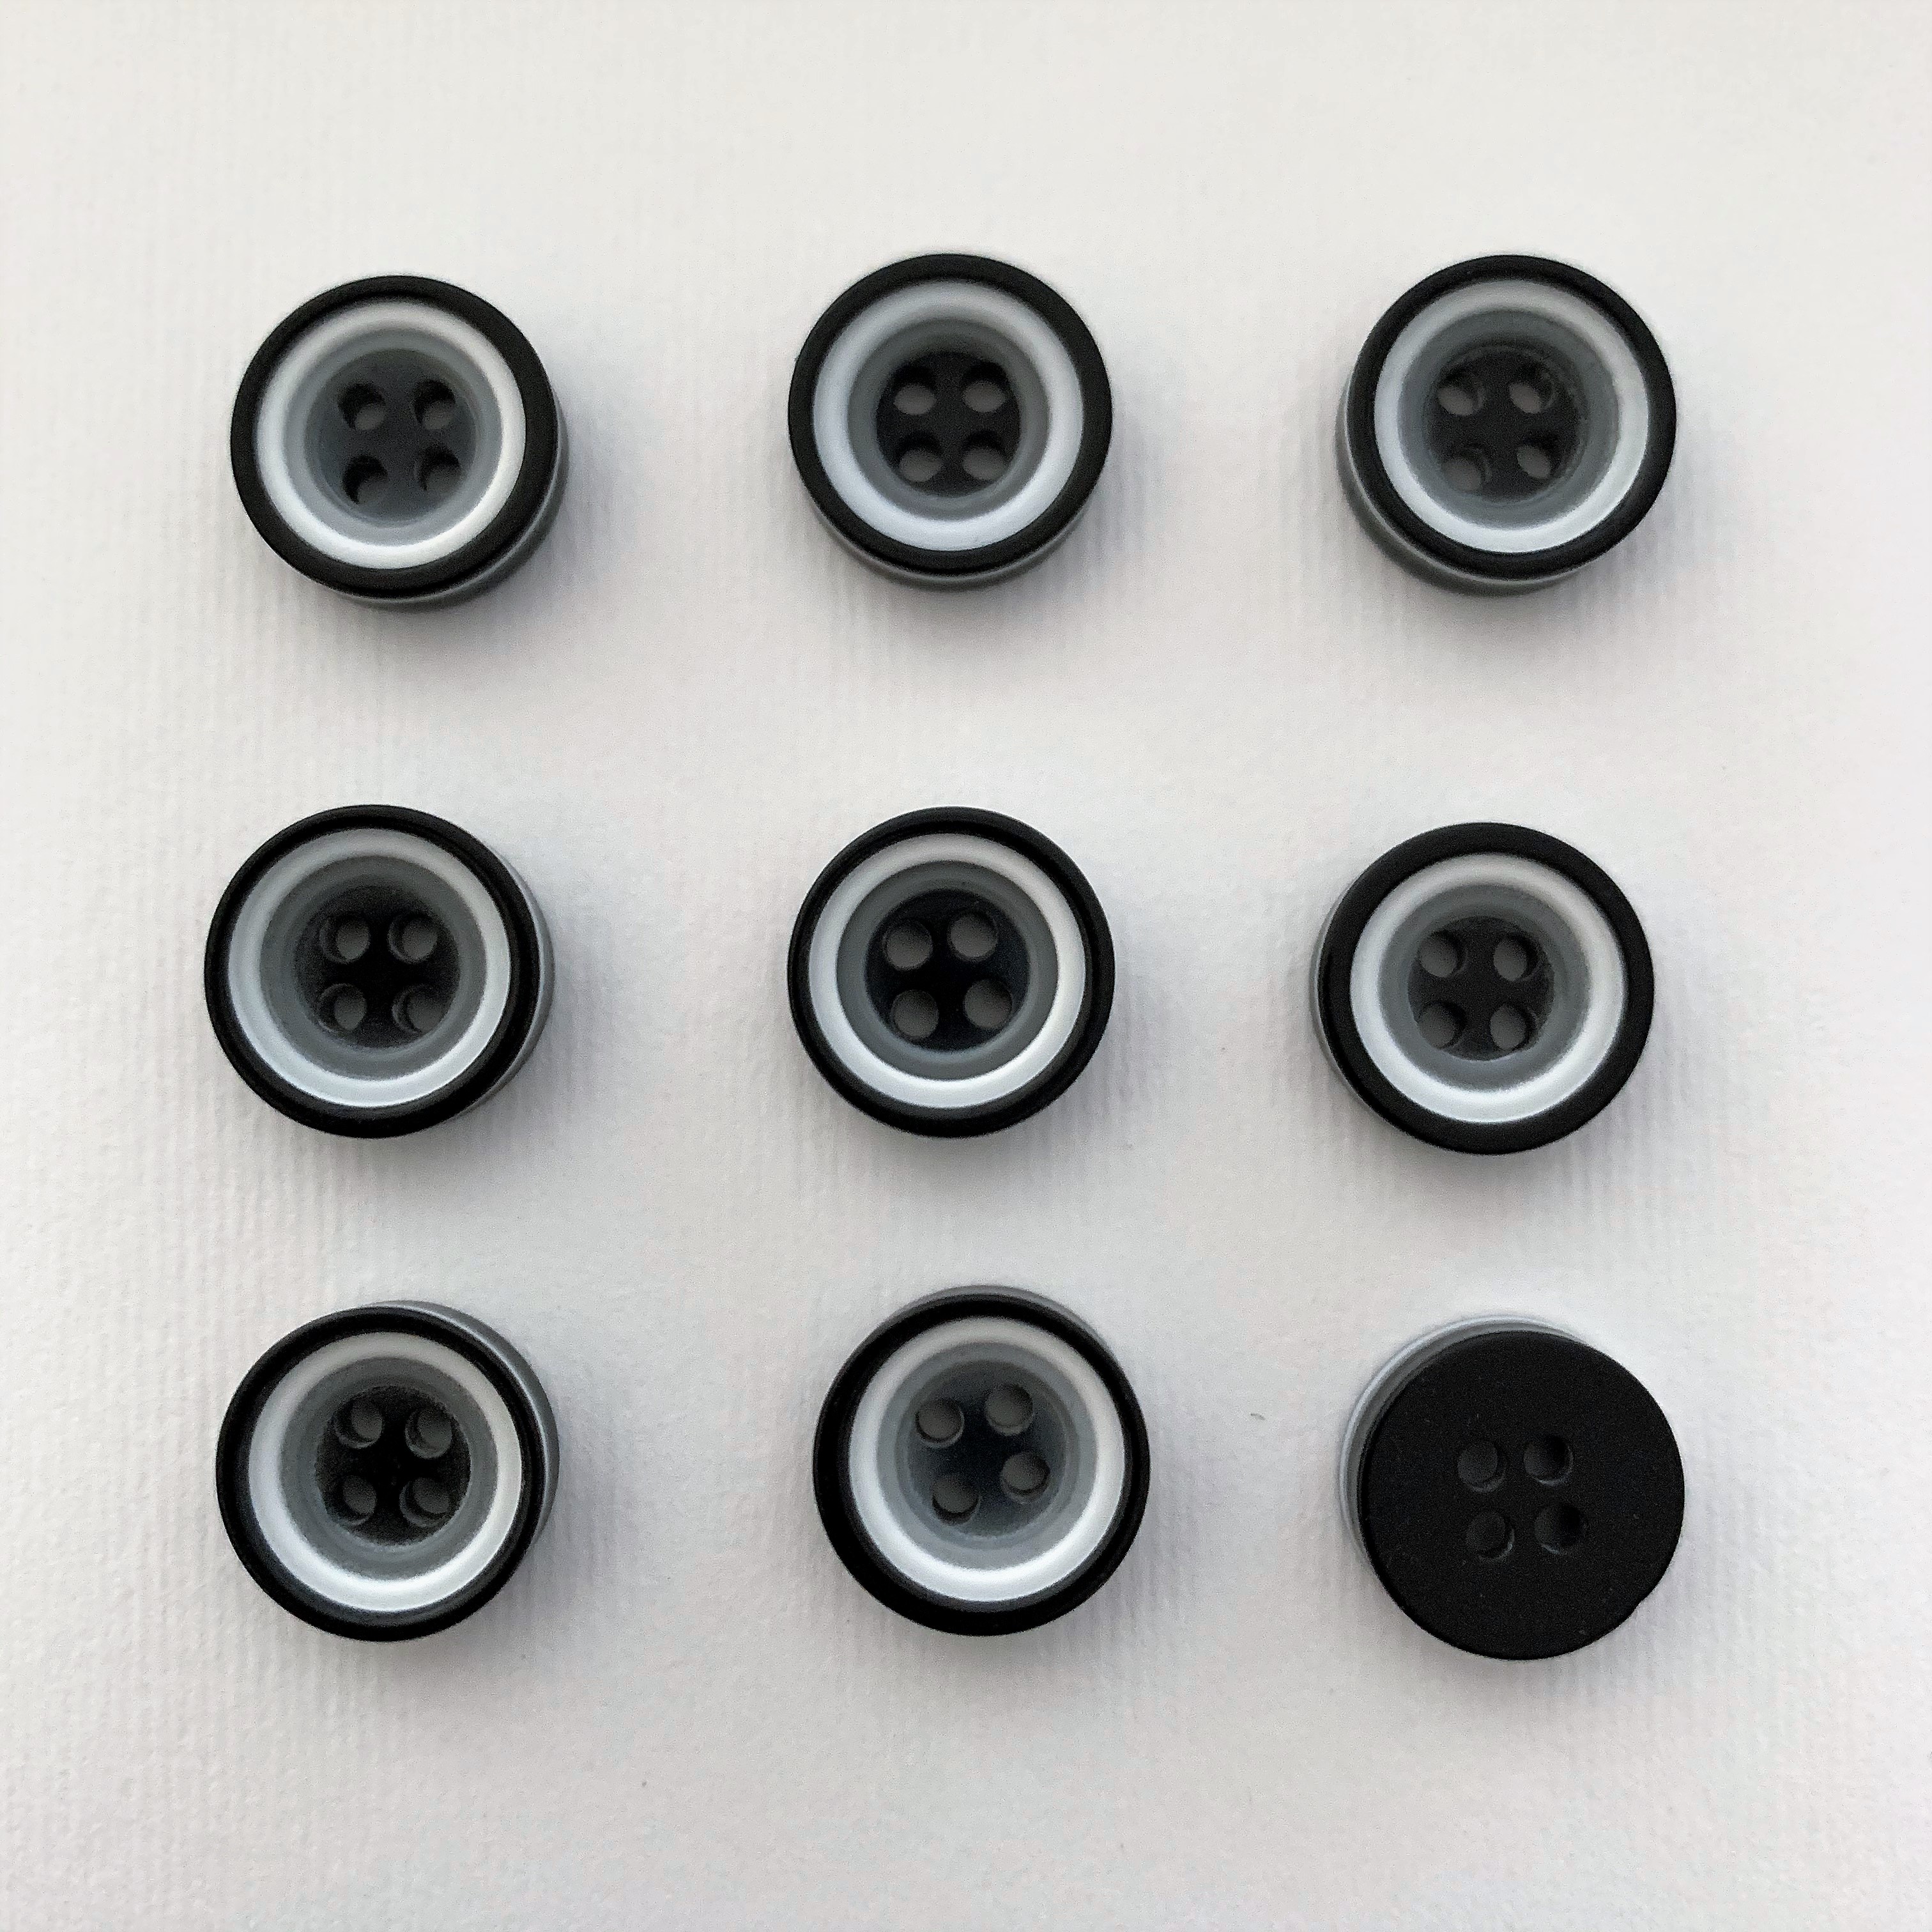 Botones MIX COLORES 12,5 mm